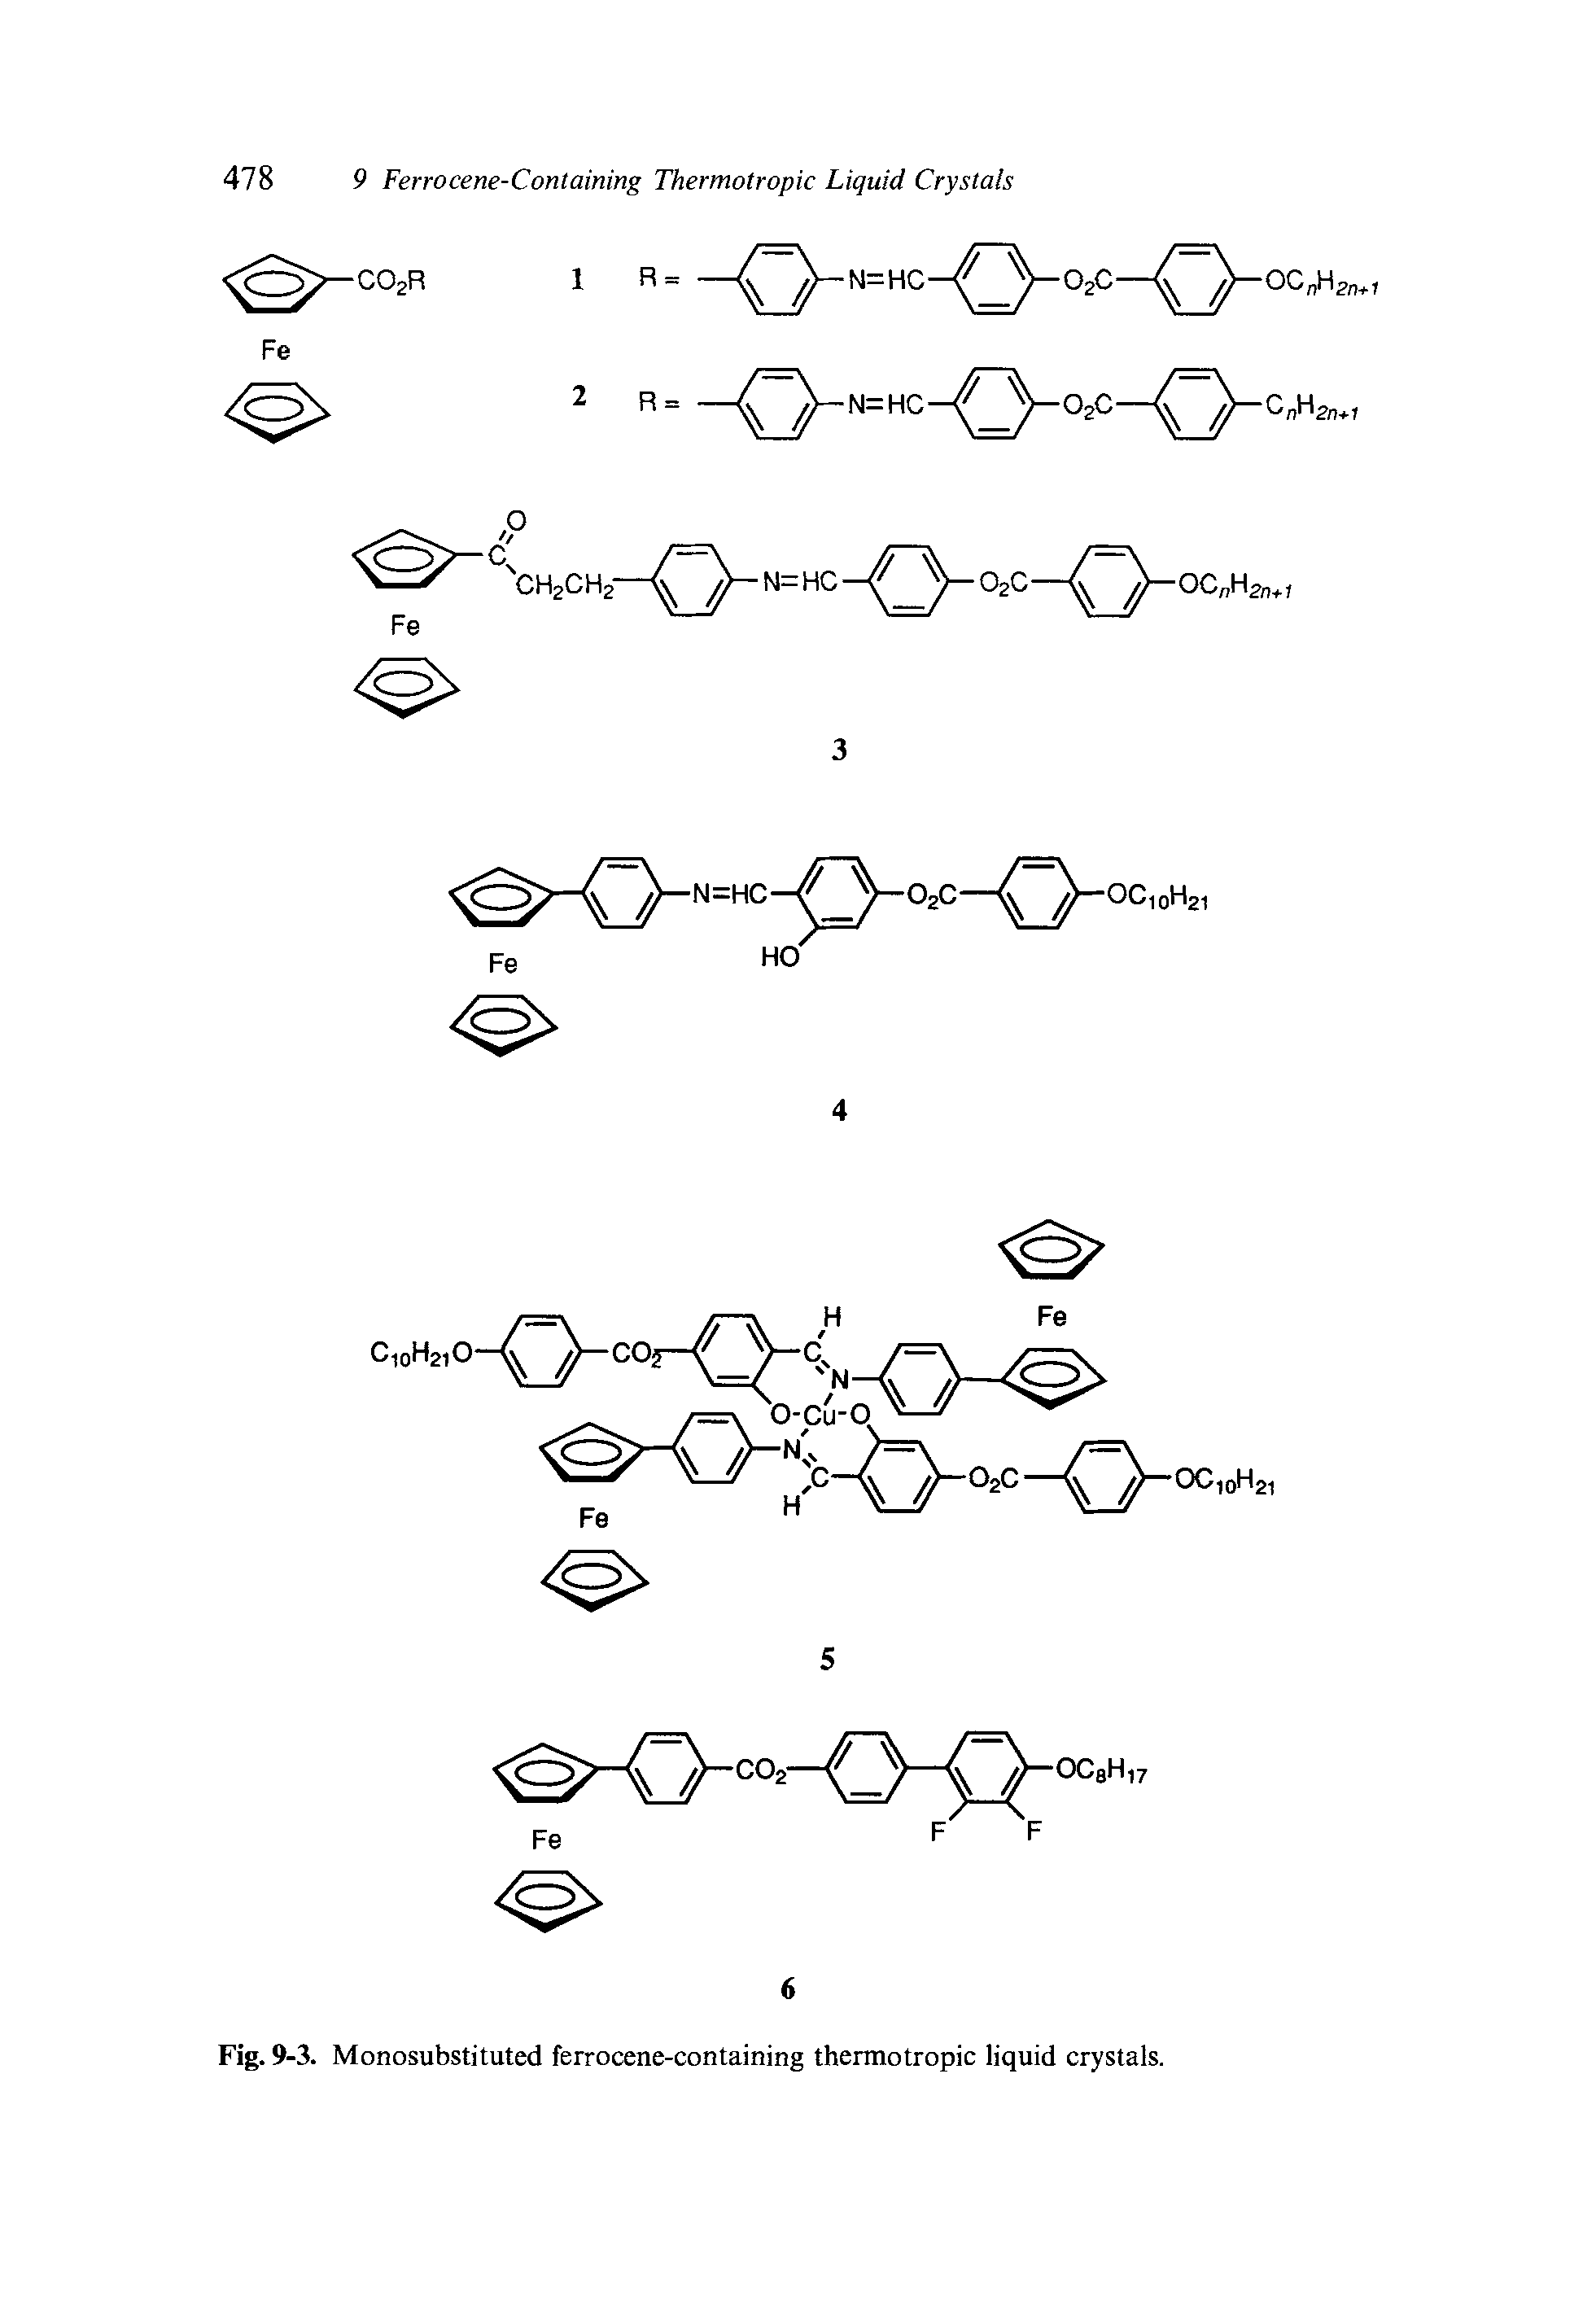 Fig. 9-3. Monosubstituted ferrocene-containing thermotropic liquid crystals.